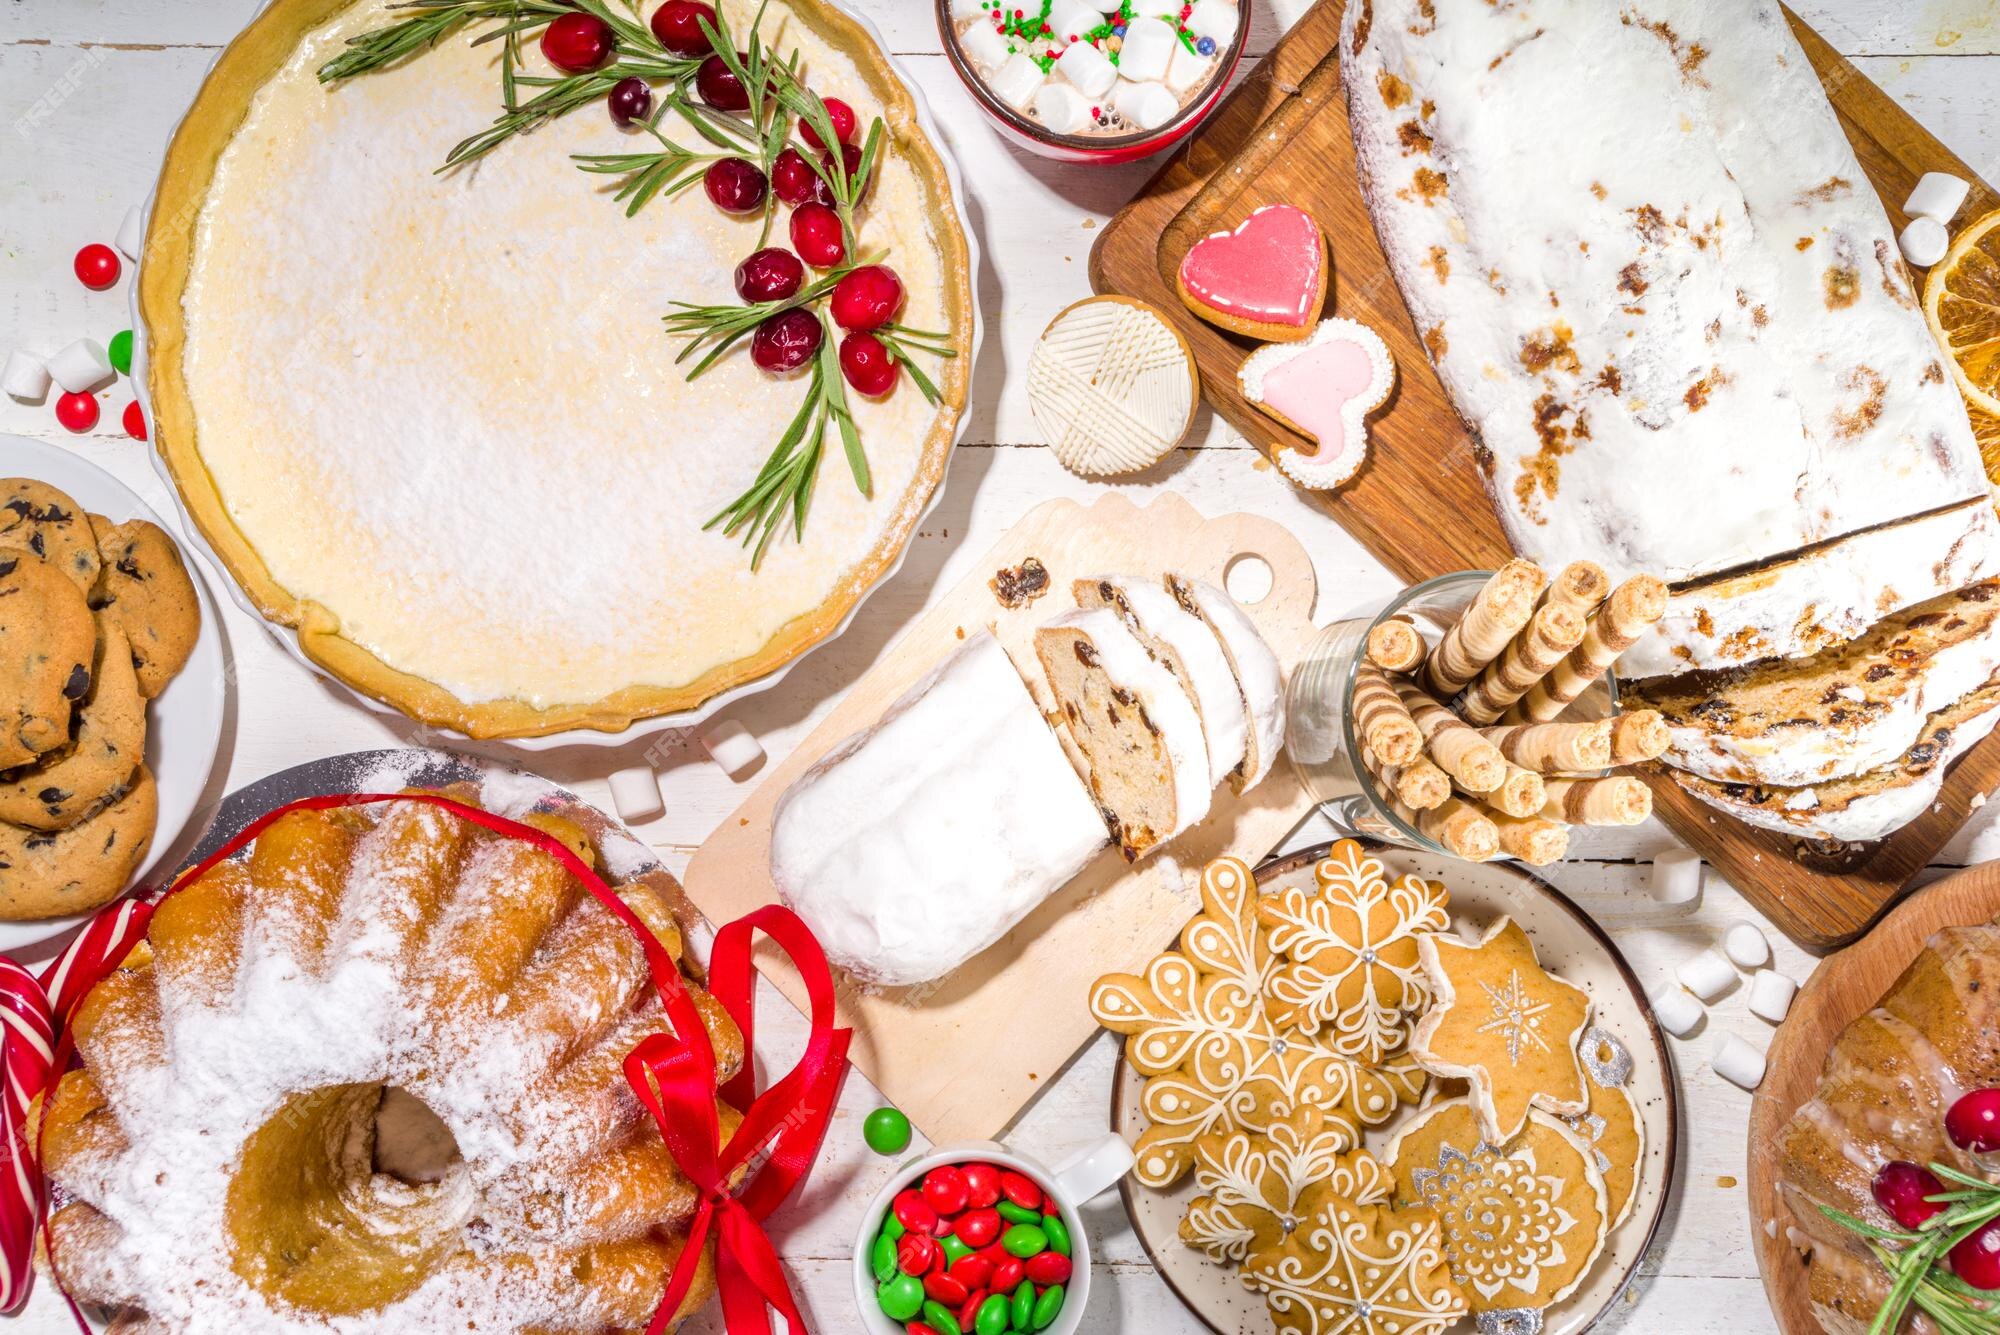 https://img.freepik.com/premium-photo/assortment-christmas-homemade-baking-sweet-set-various-traditional-christmas-pastry-cheesecake-fruitcake-stollen-gingerbread-biscuits-panettone-bakery-menu-xmas-banquet-invitation_136595-20163.jpg?w=2000